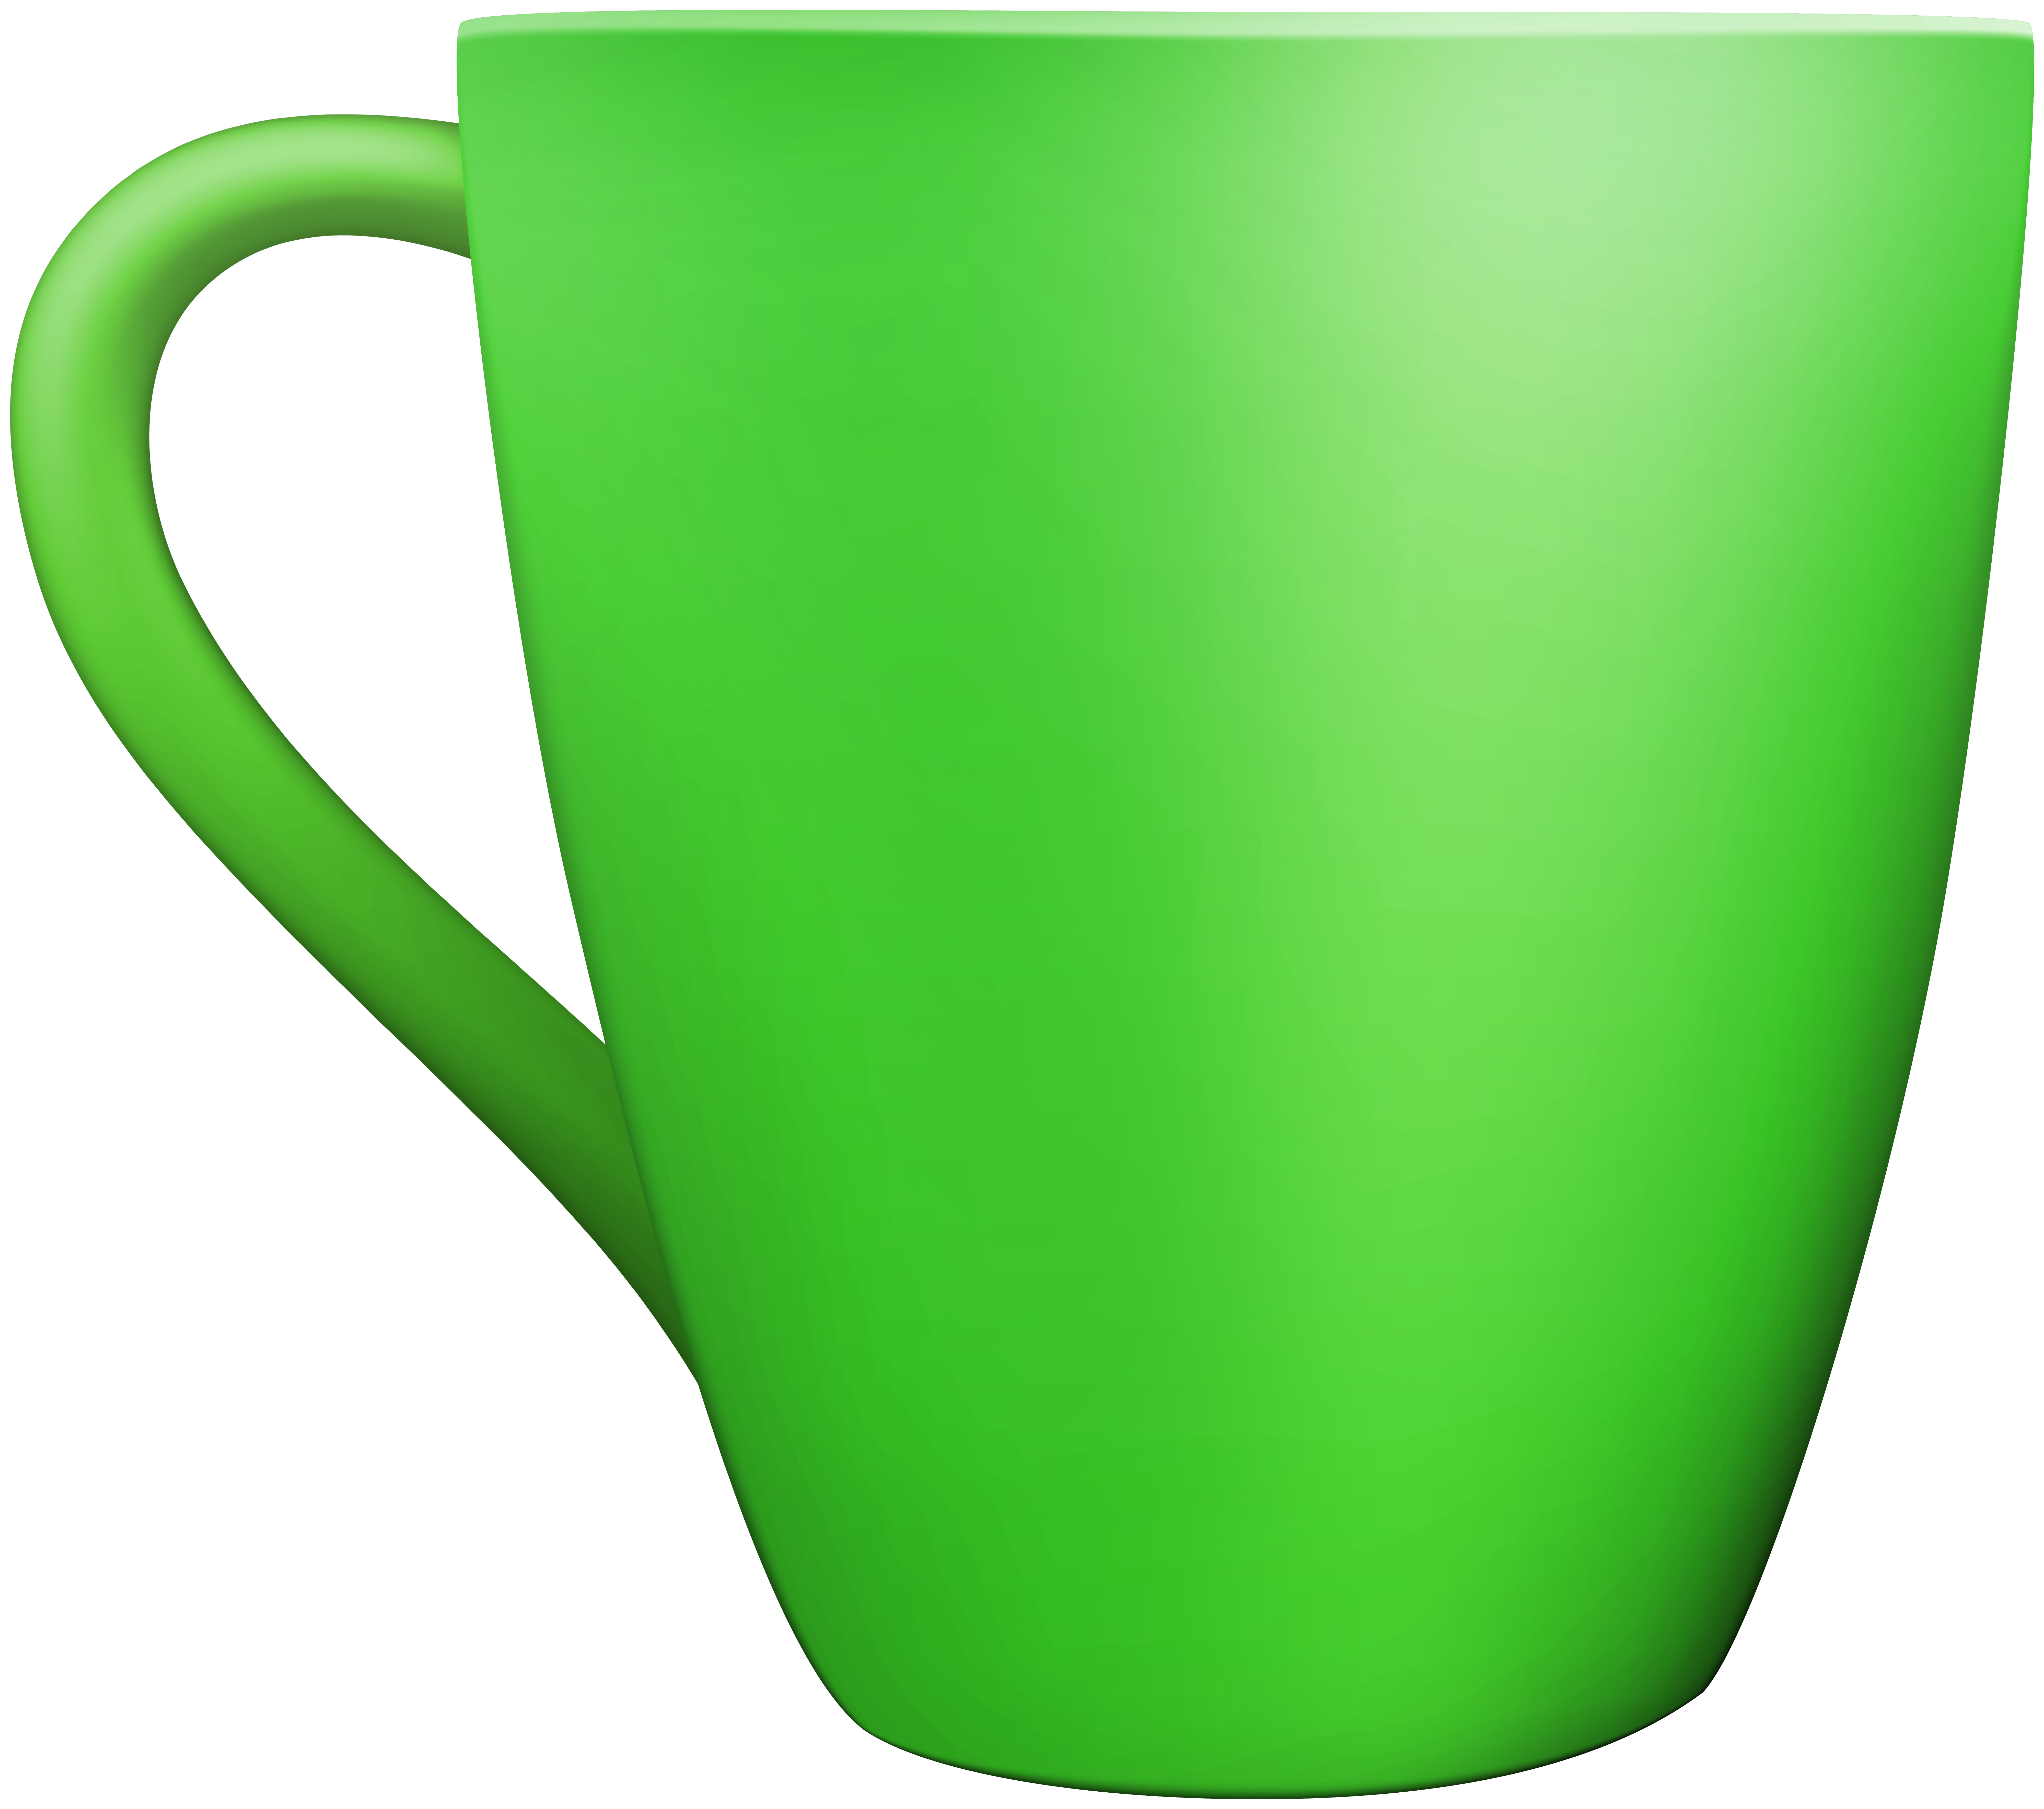 cups clipart green mug